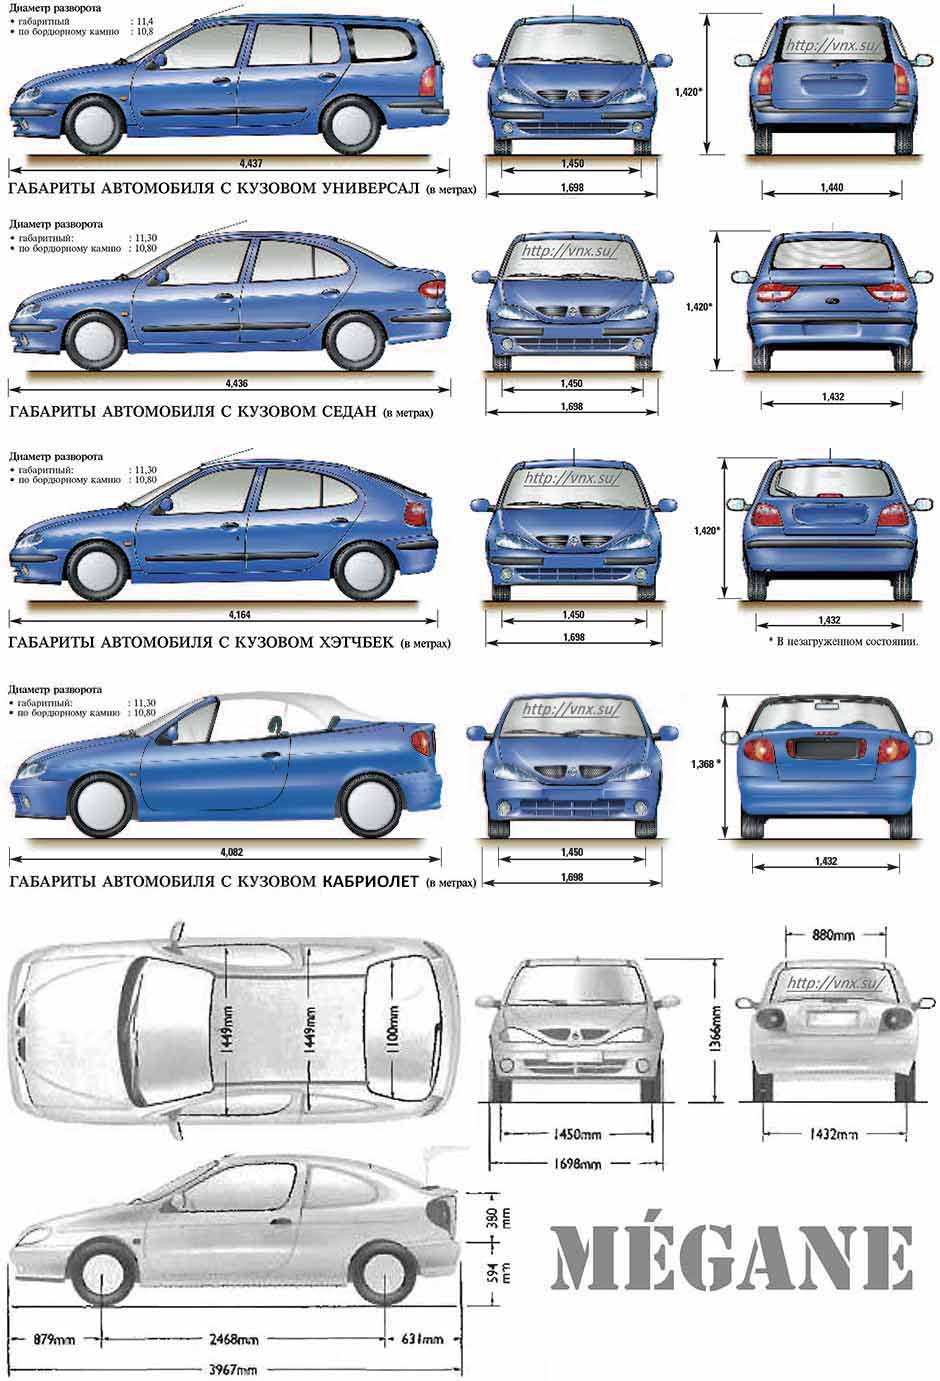 Габаритные размеры Рено Меган 1995-2002 (dimensions Renault Megane Mark I)